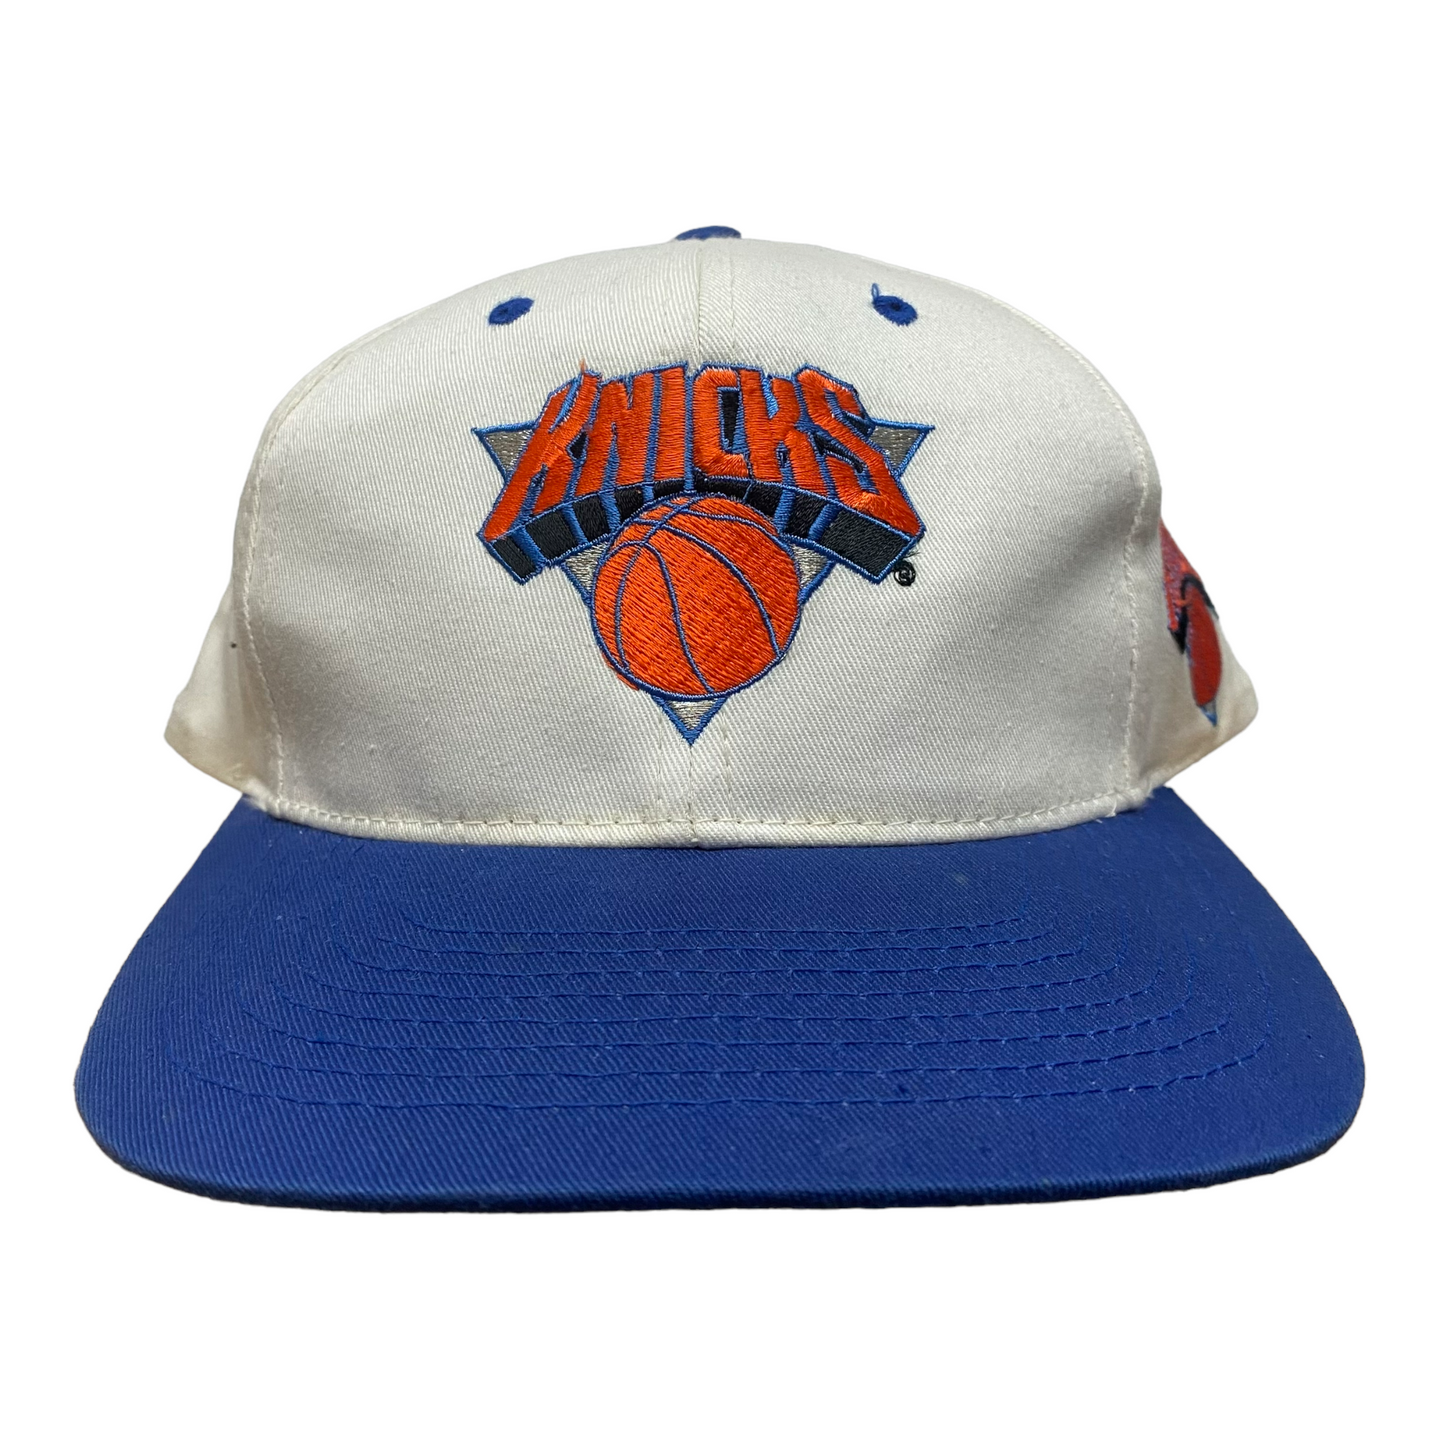 Vintage New York Knicks snapback hat